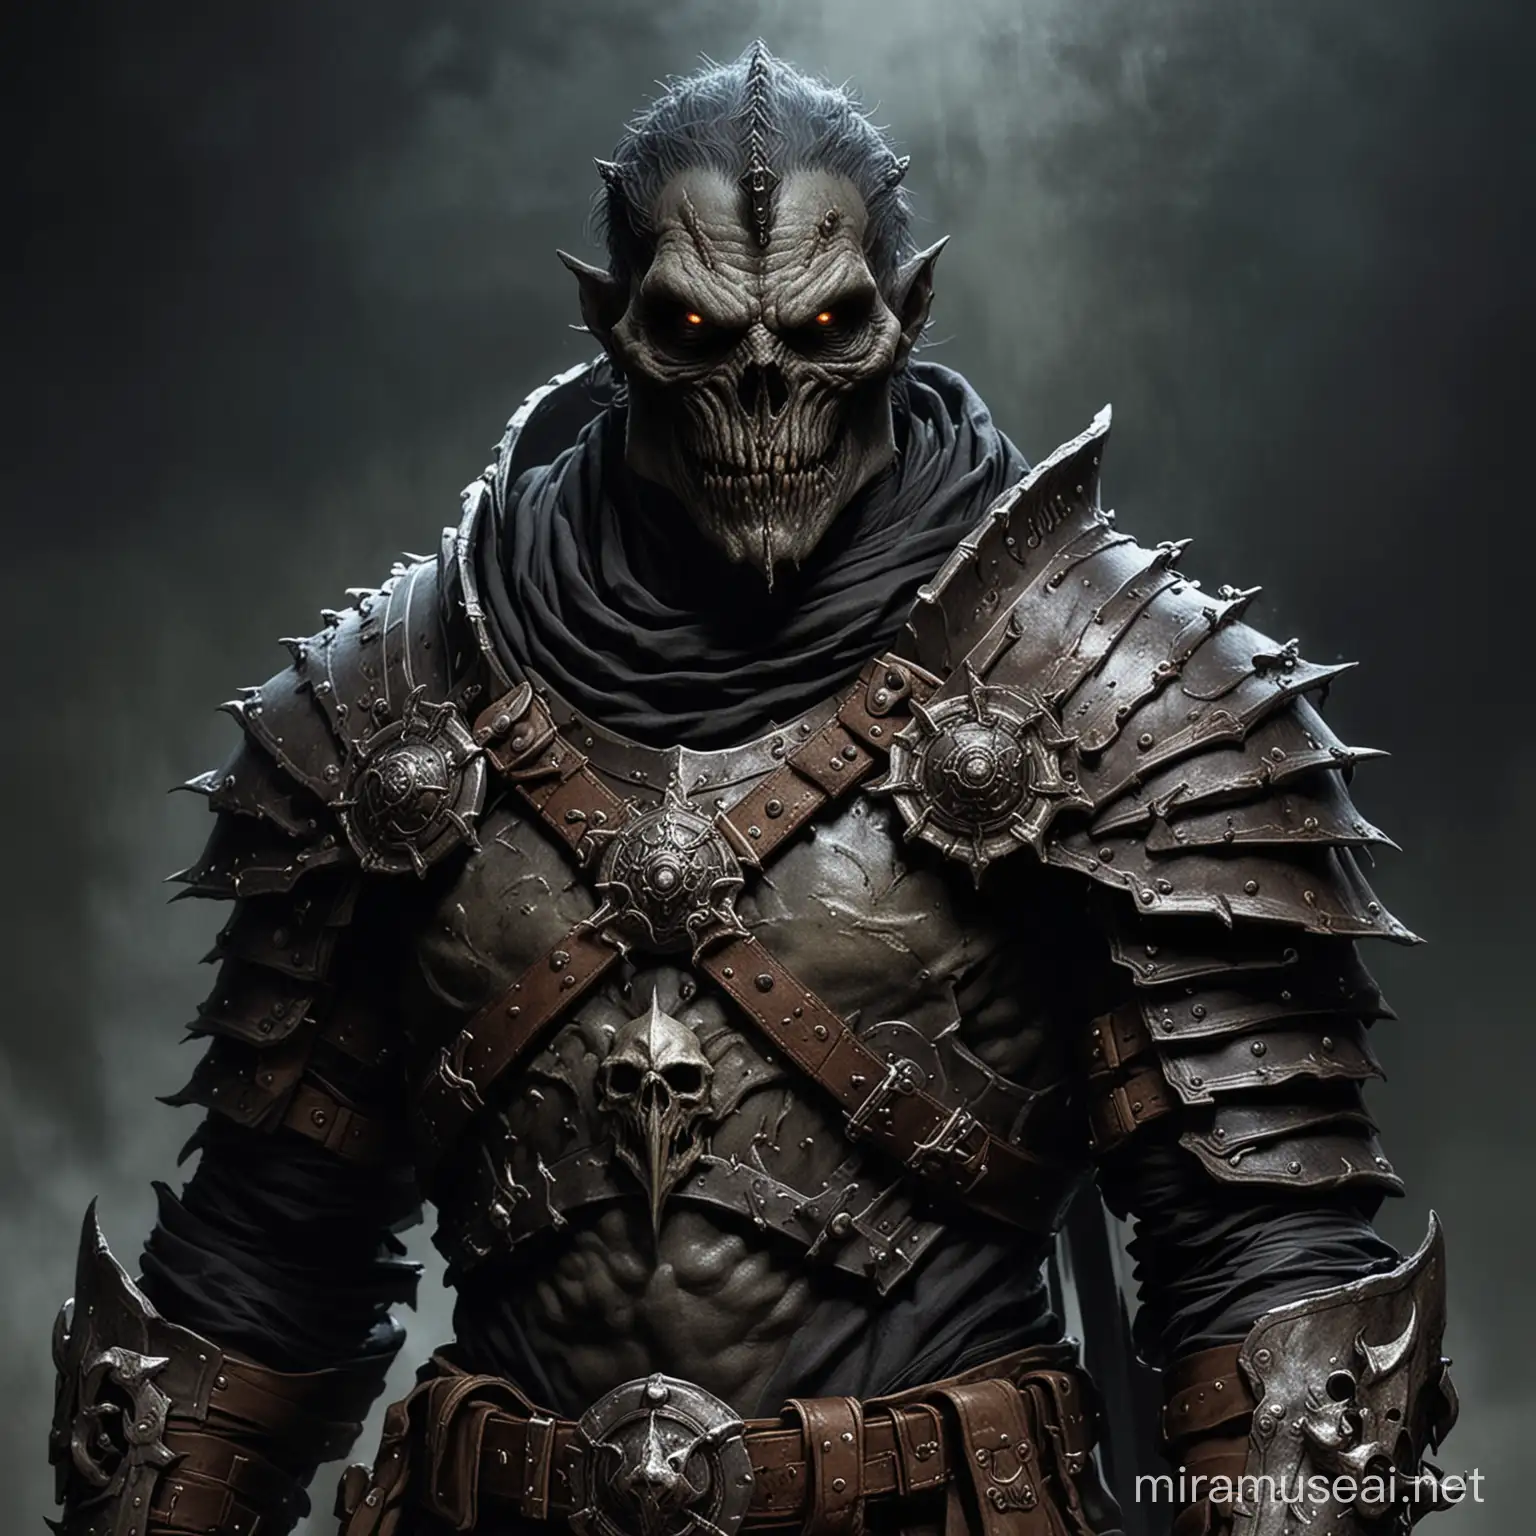 Dark Fantasy Monster Portrait Brooding Medieval Infantry